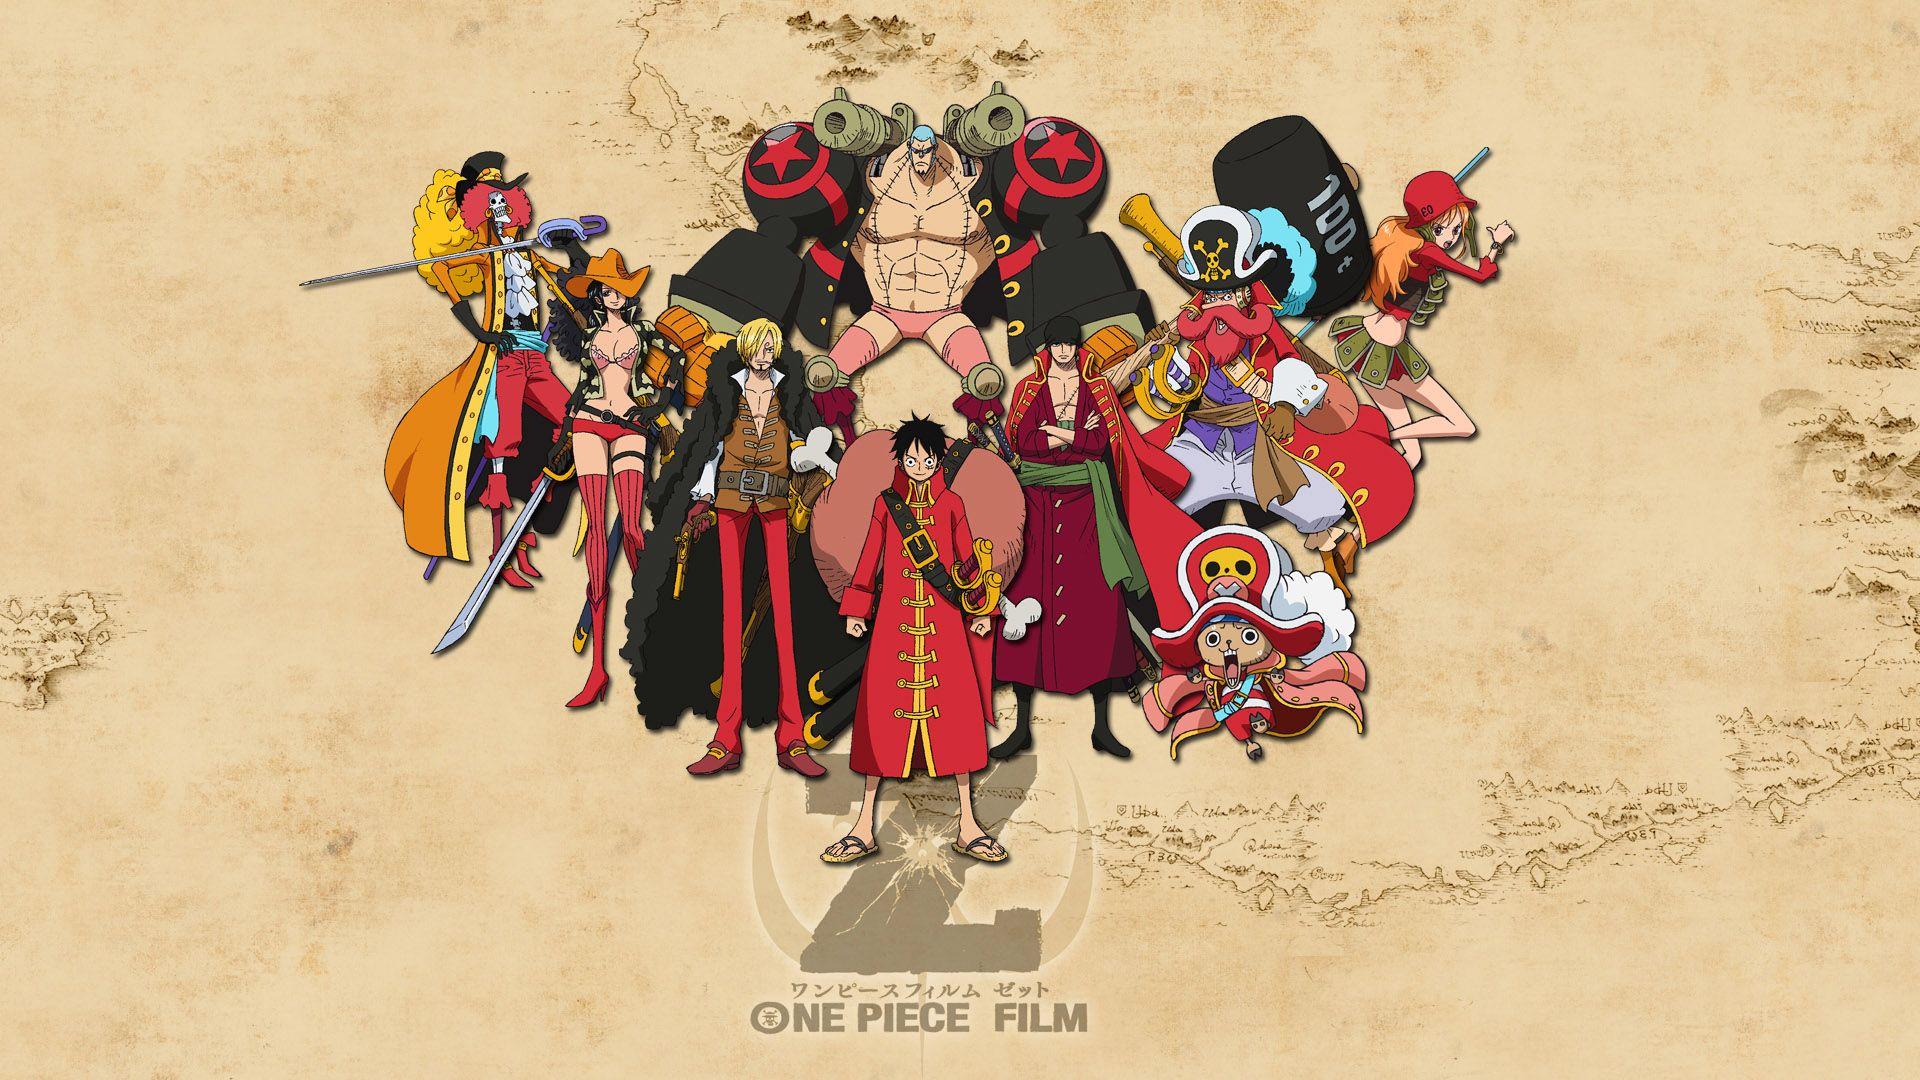 Download 40 Wallpaper One Piece Movie terbaru 2019